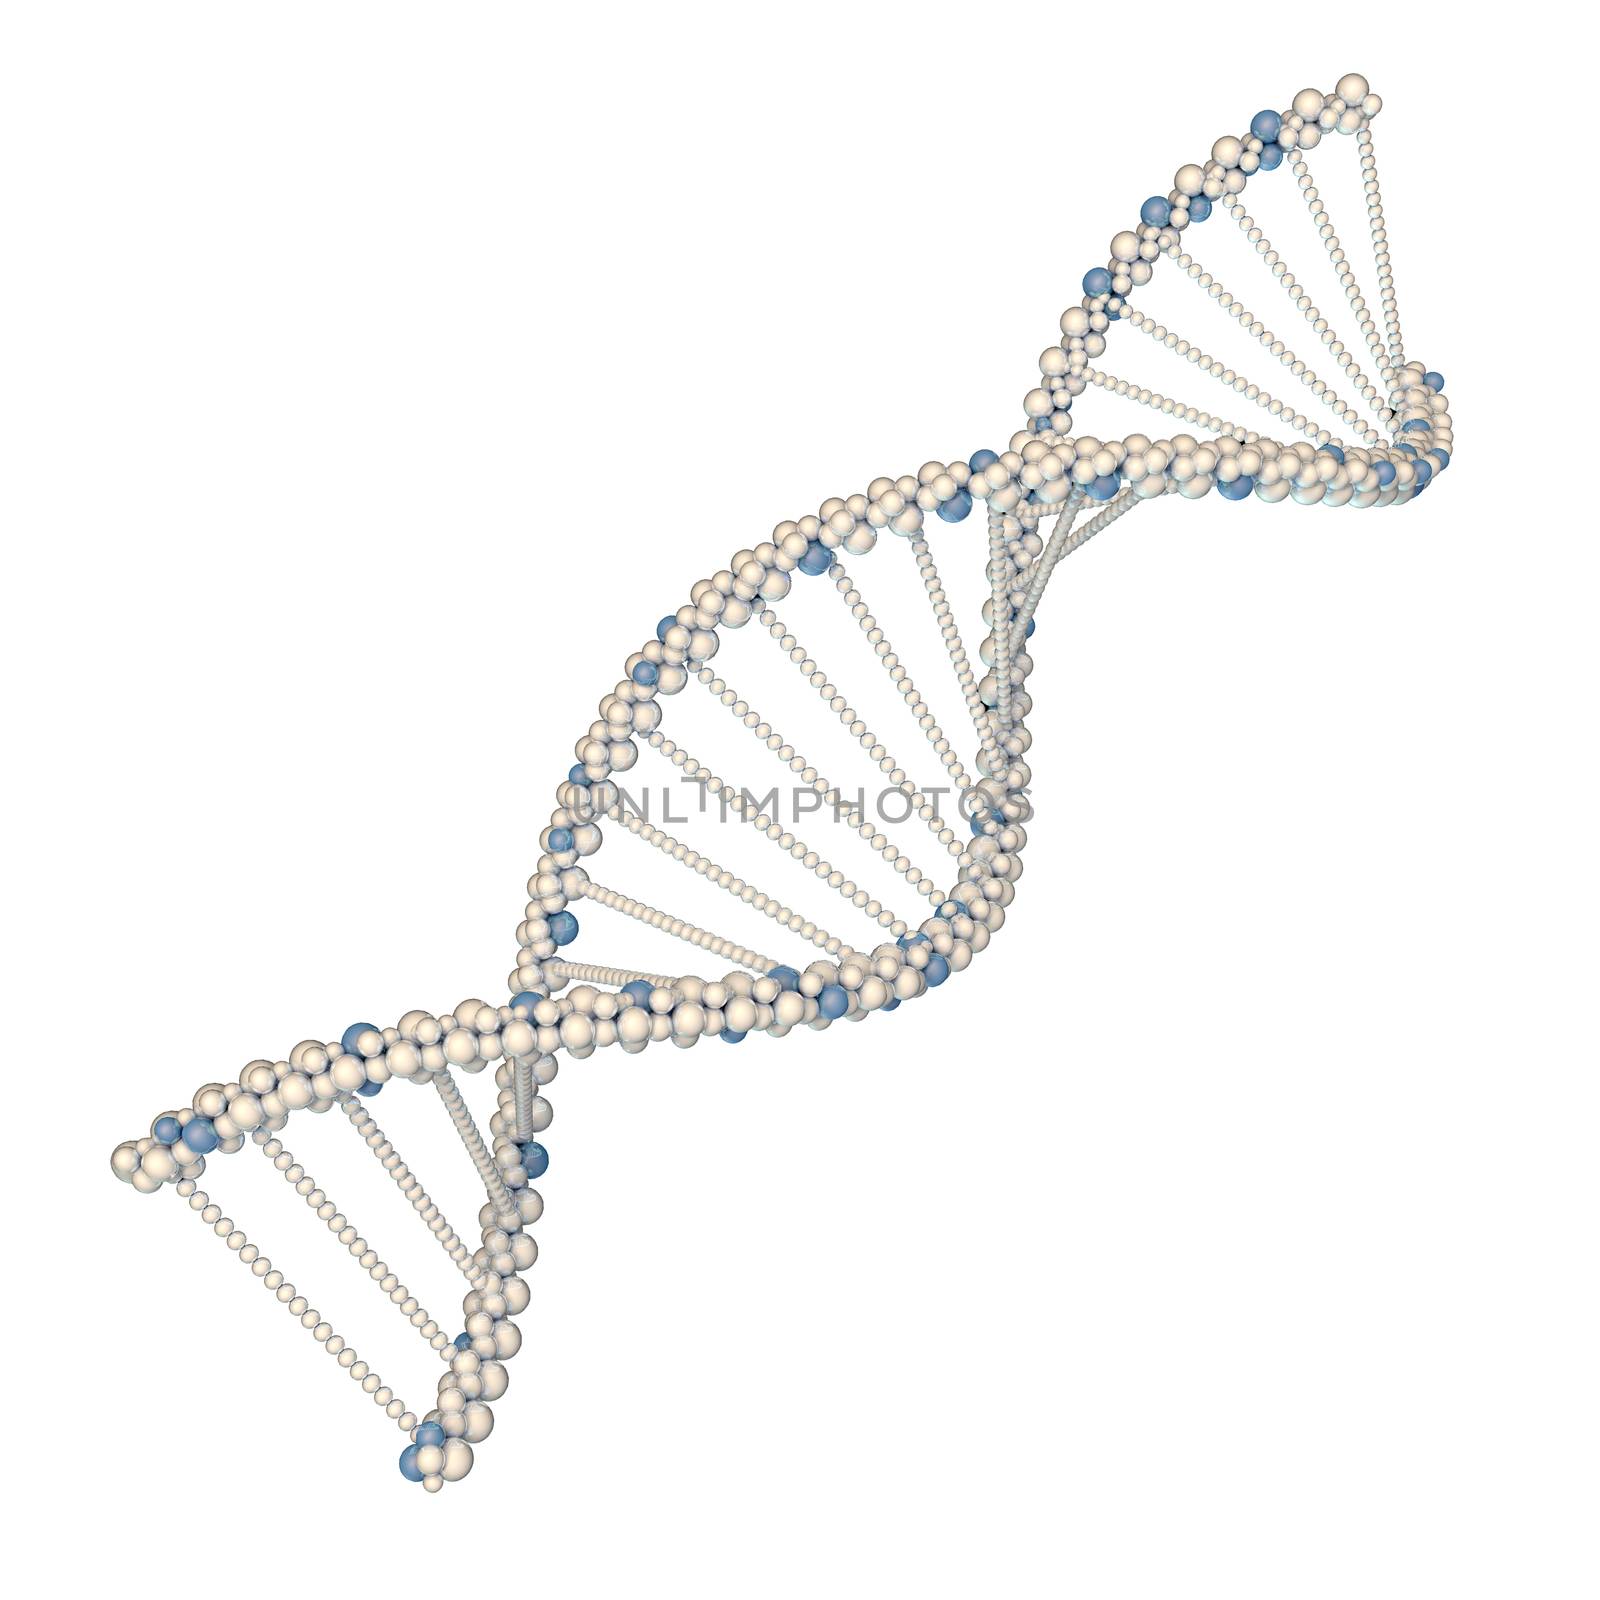 DNA molecules by cherezoff